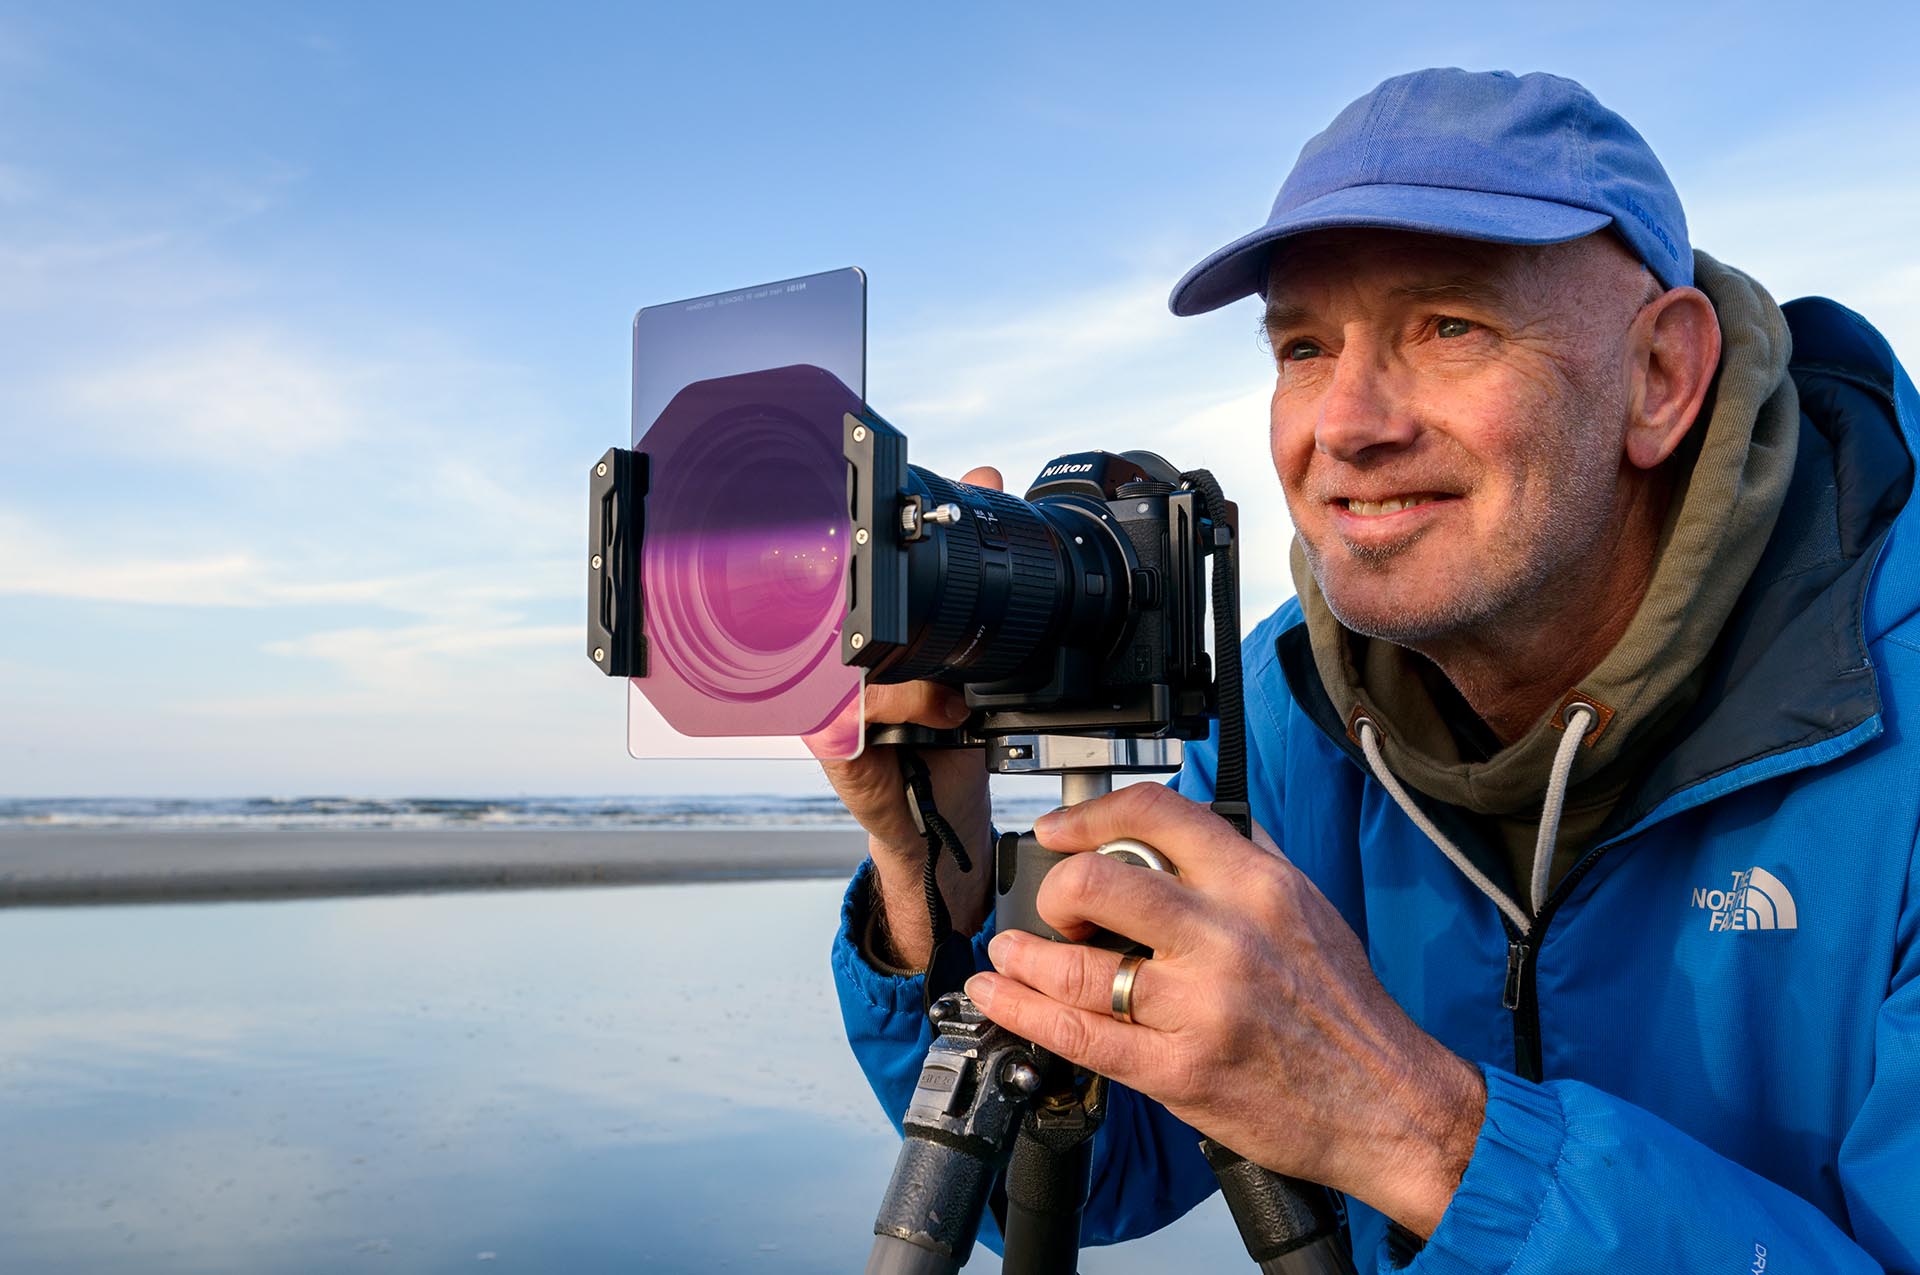 Martin with camera on tripod on beach.